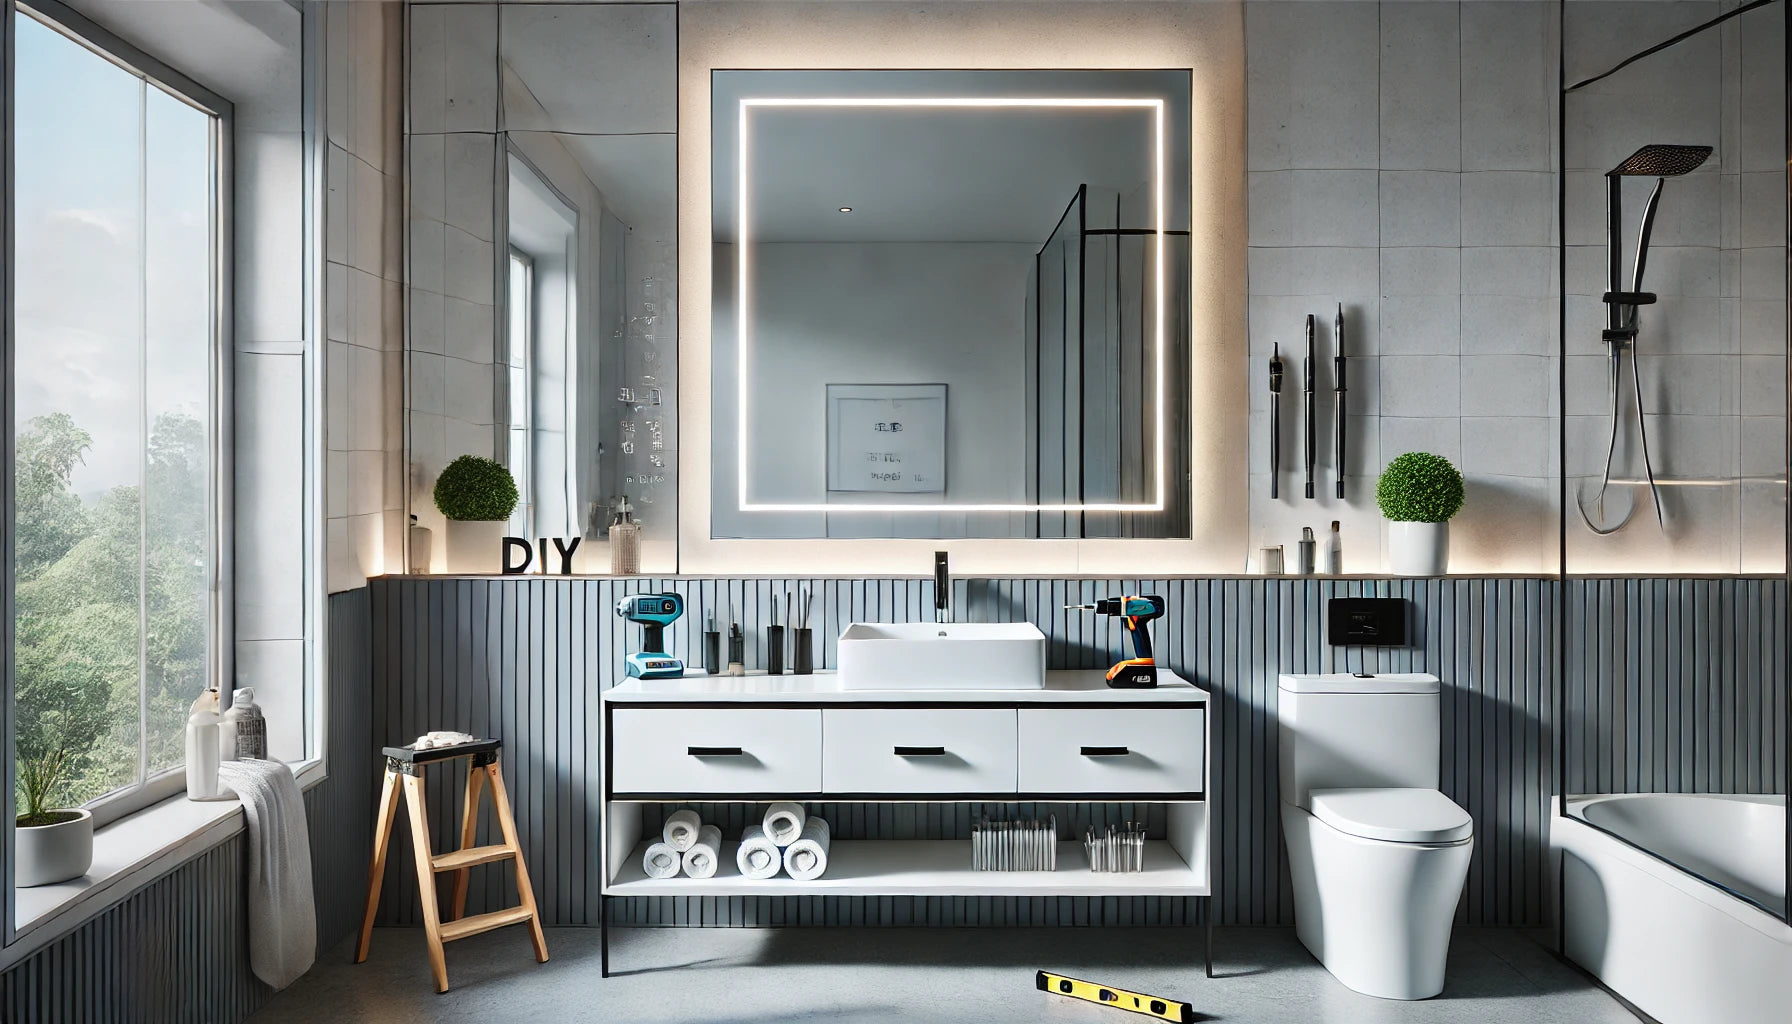 Bathroom Mirror Installation: A Beginner DIY Guide